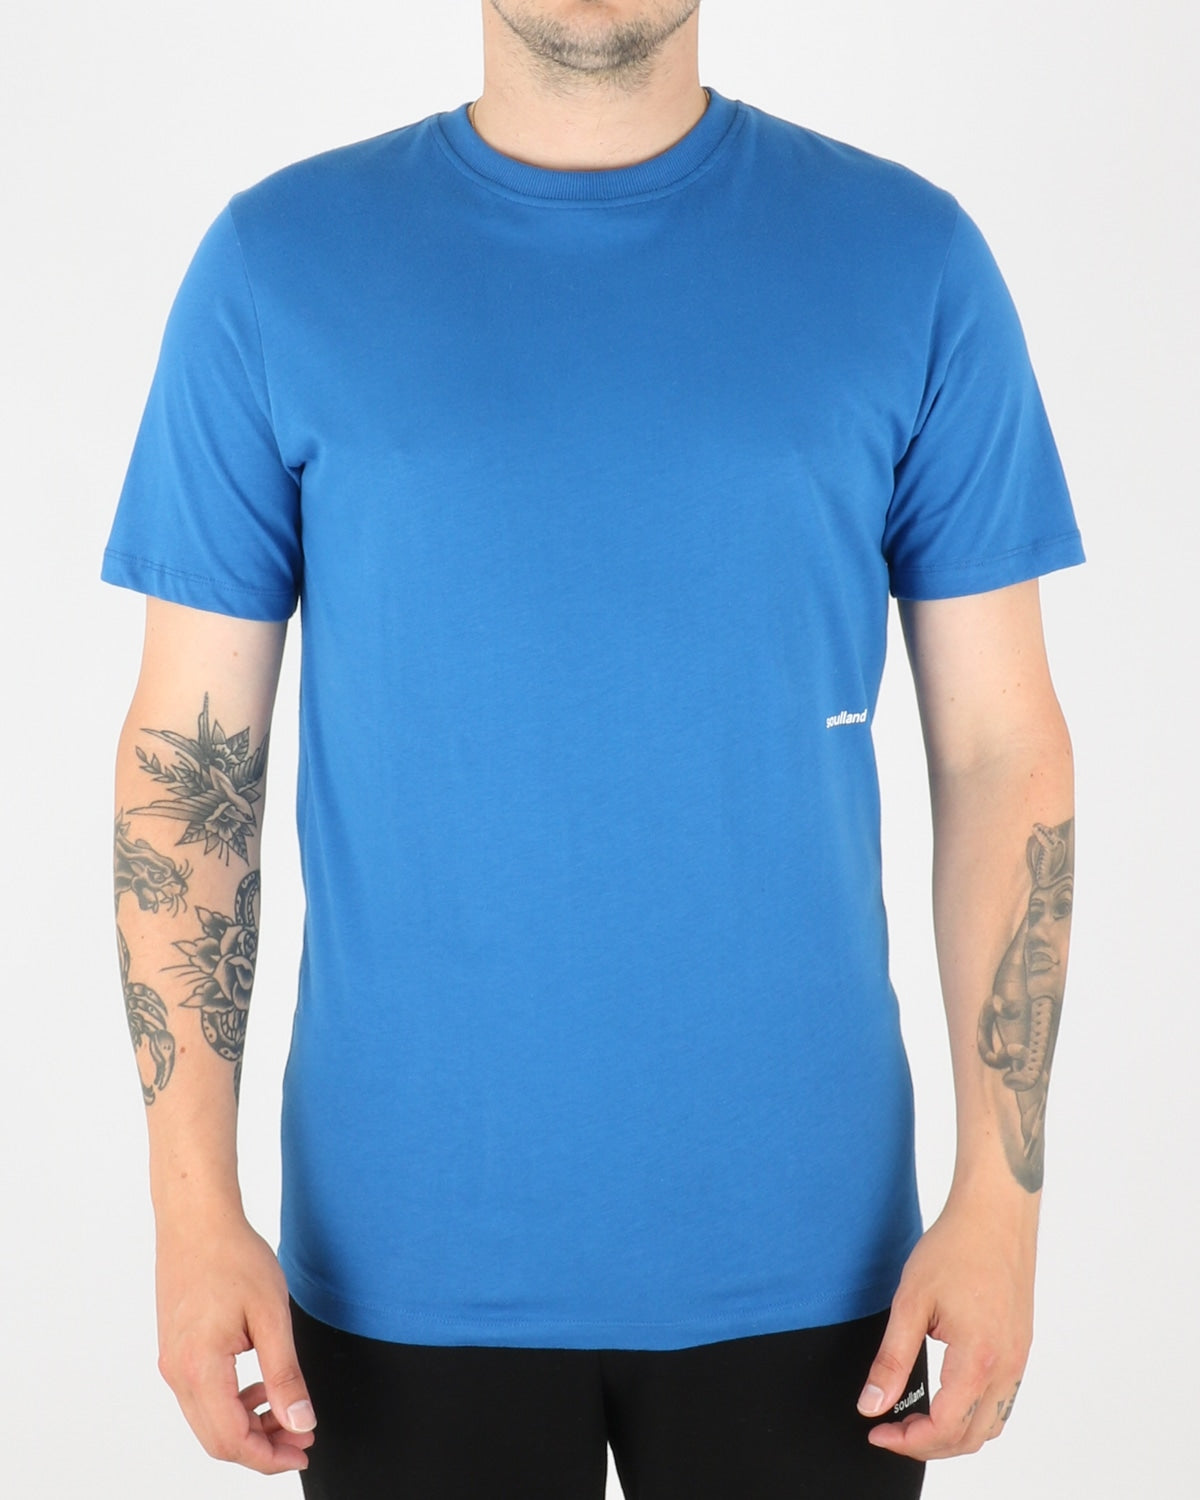 soulland_logic coffey t-shirt_blue_1_3